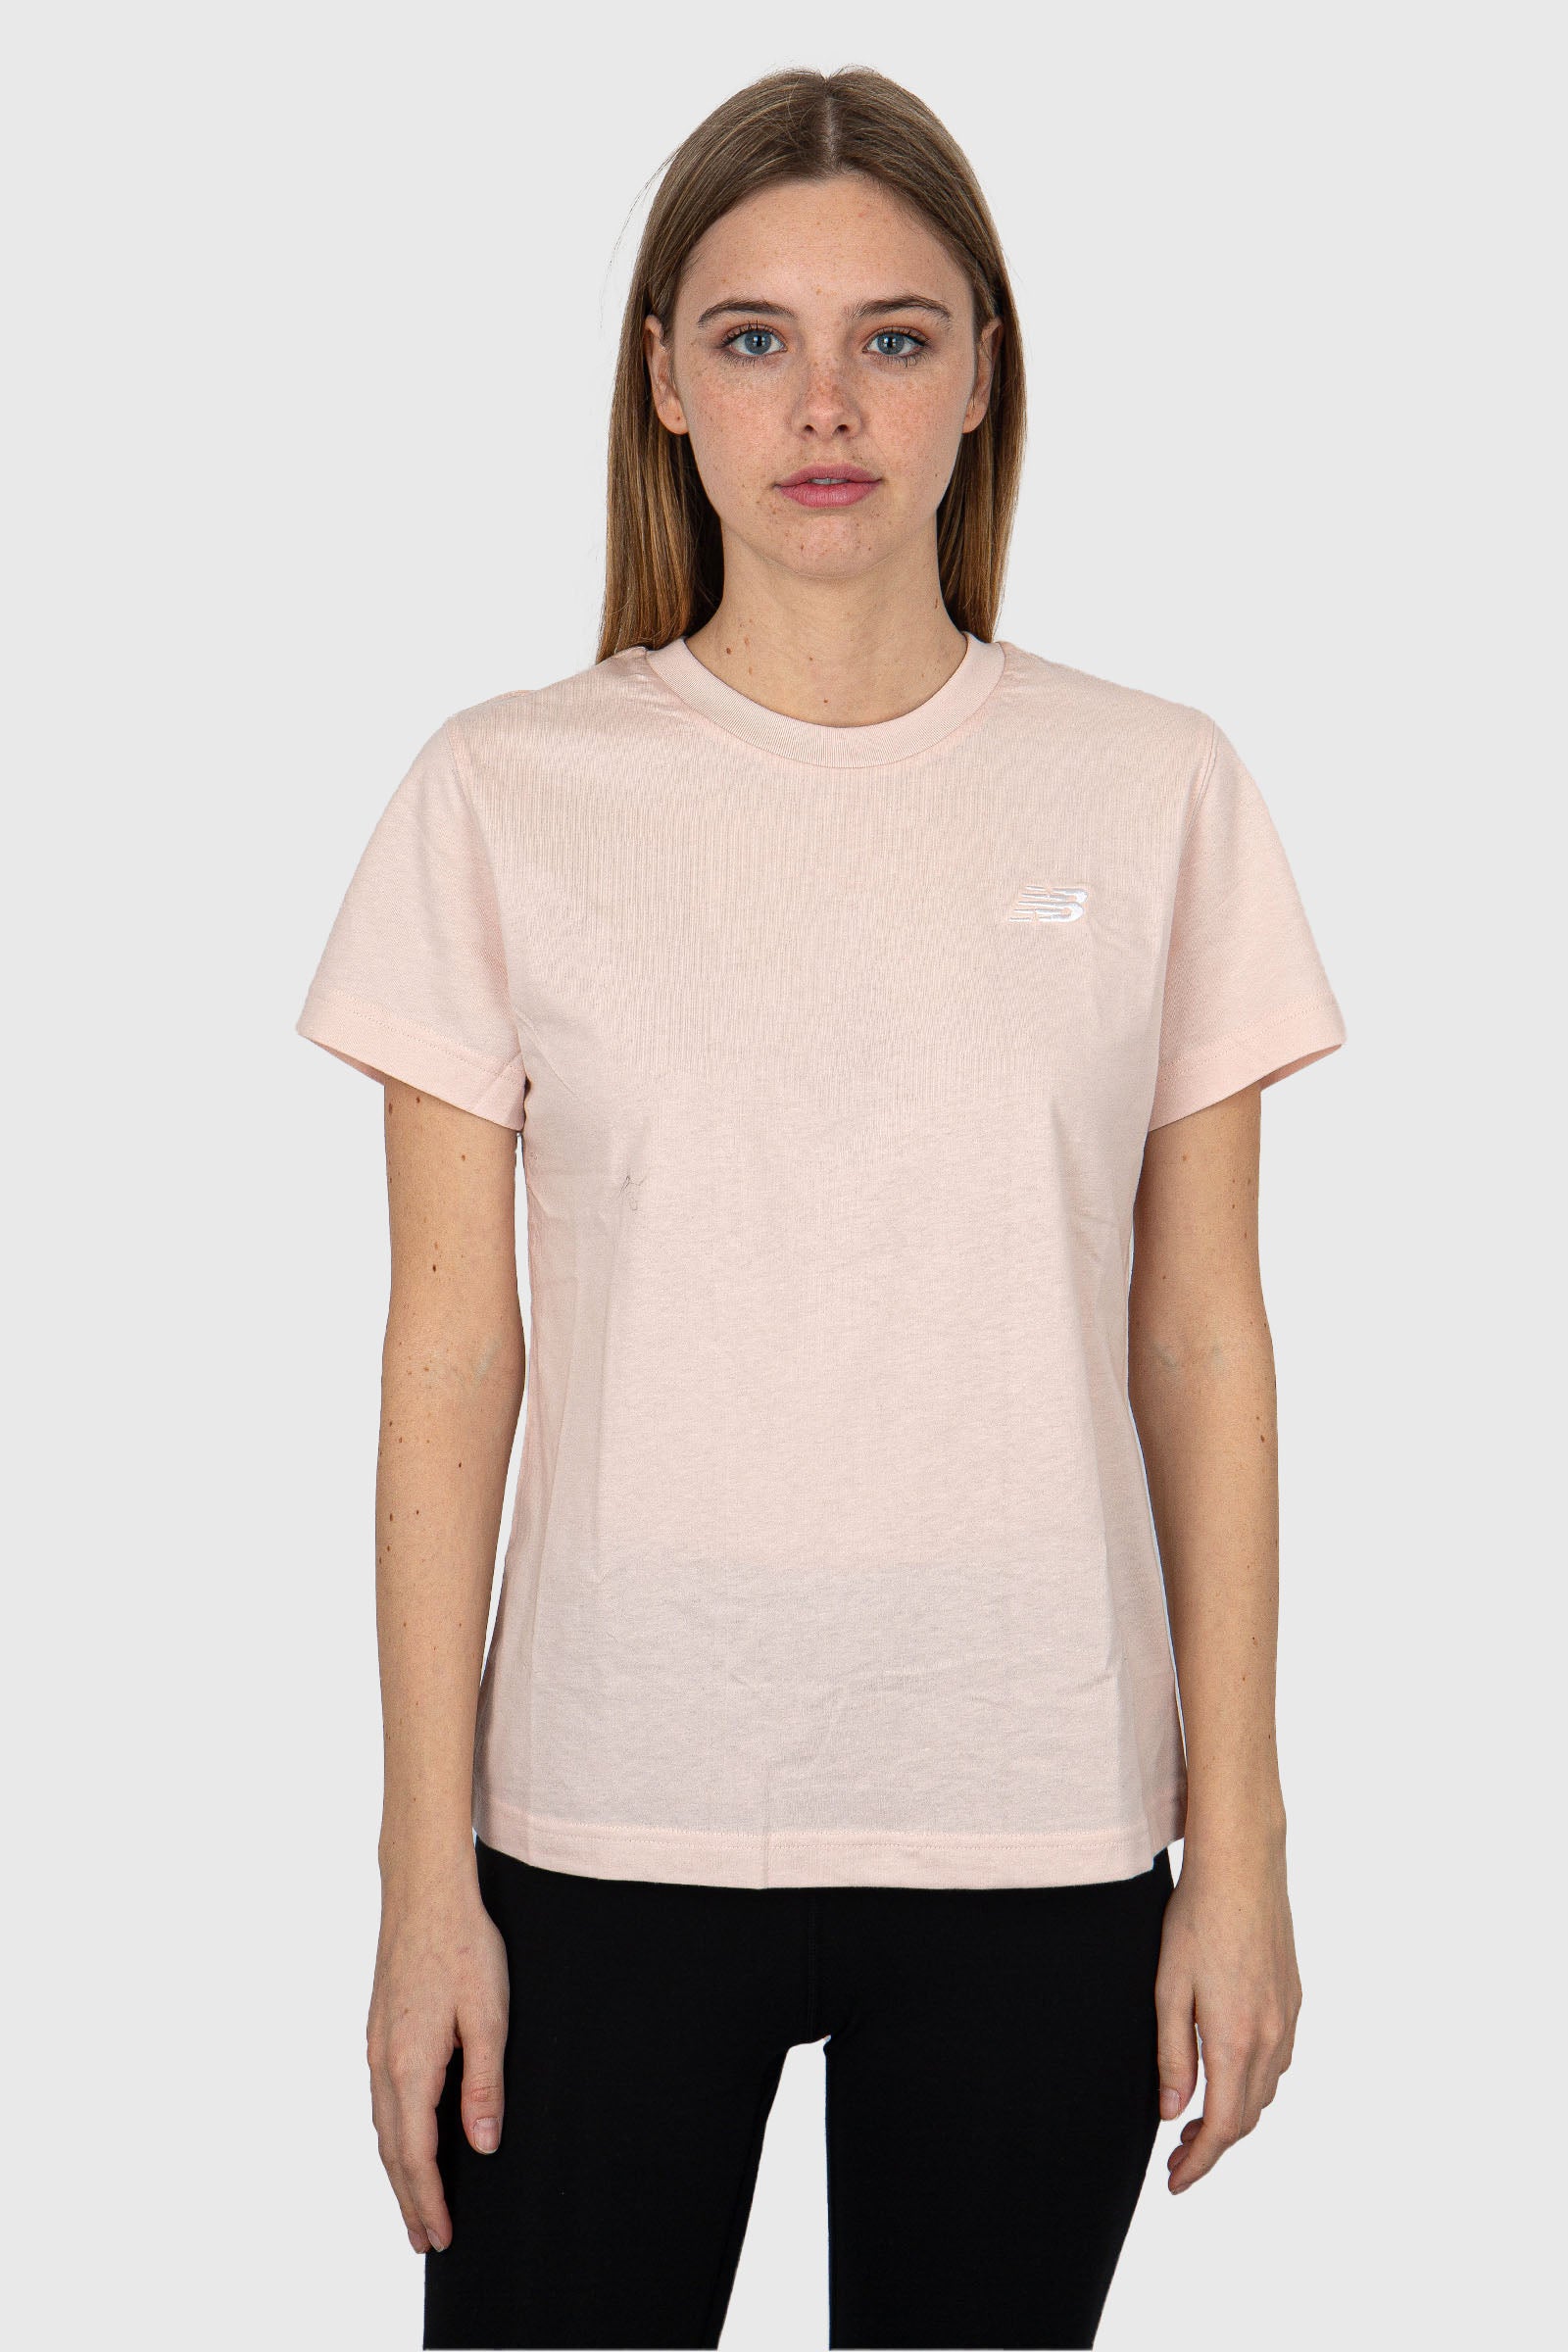 New Balance T-Shirt Jersey Small Logo Light Pink Cotton - 1